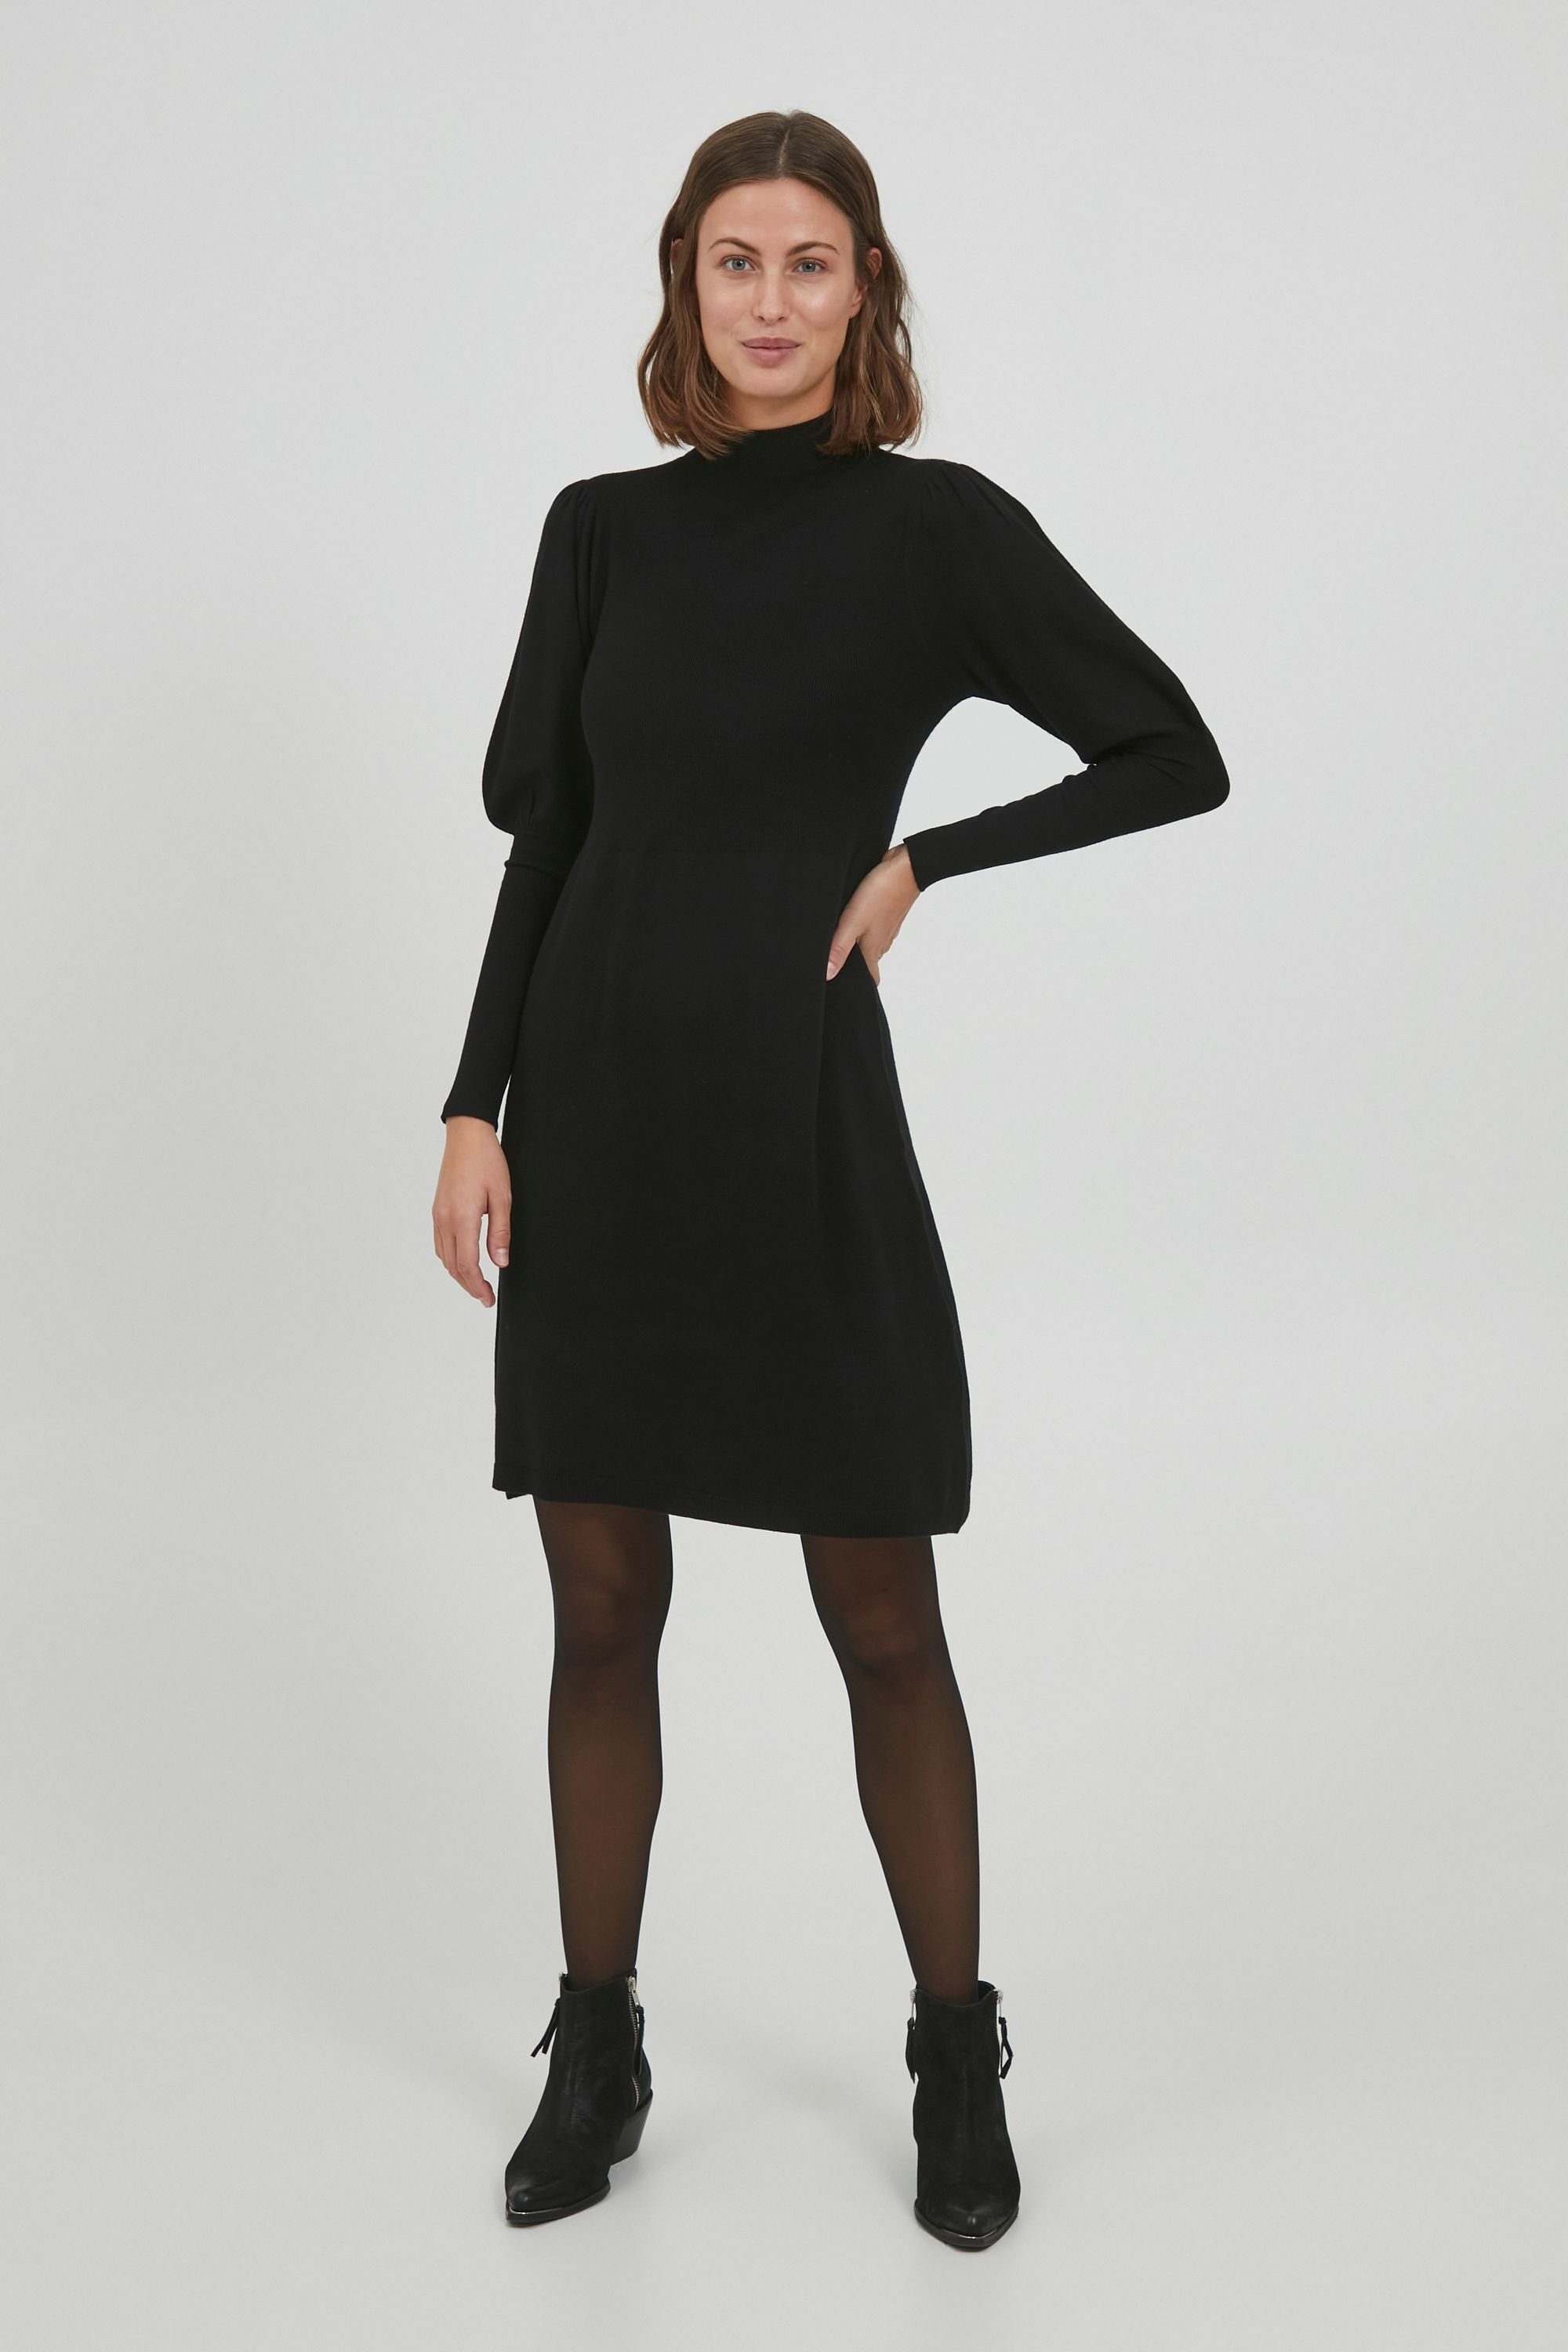 Black Dress fransa 4 FRDEDINA 20610155 Fransa - Strickkleid